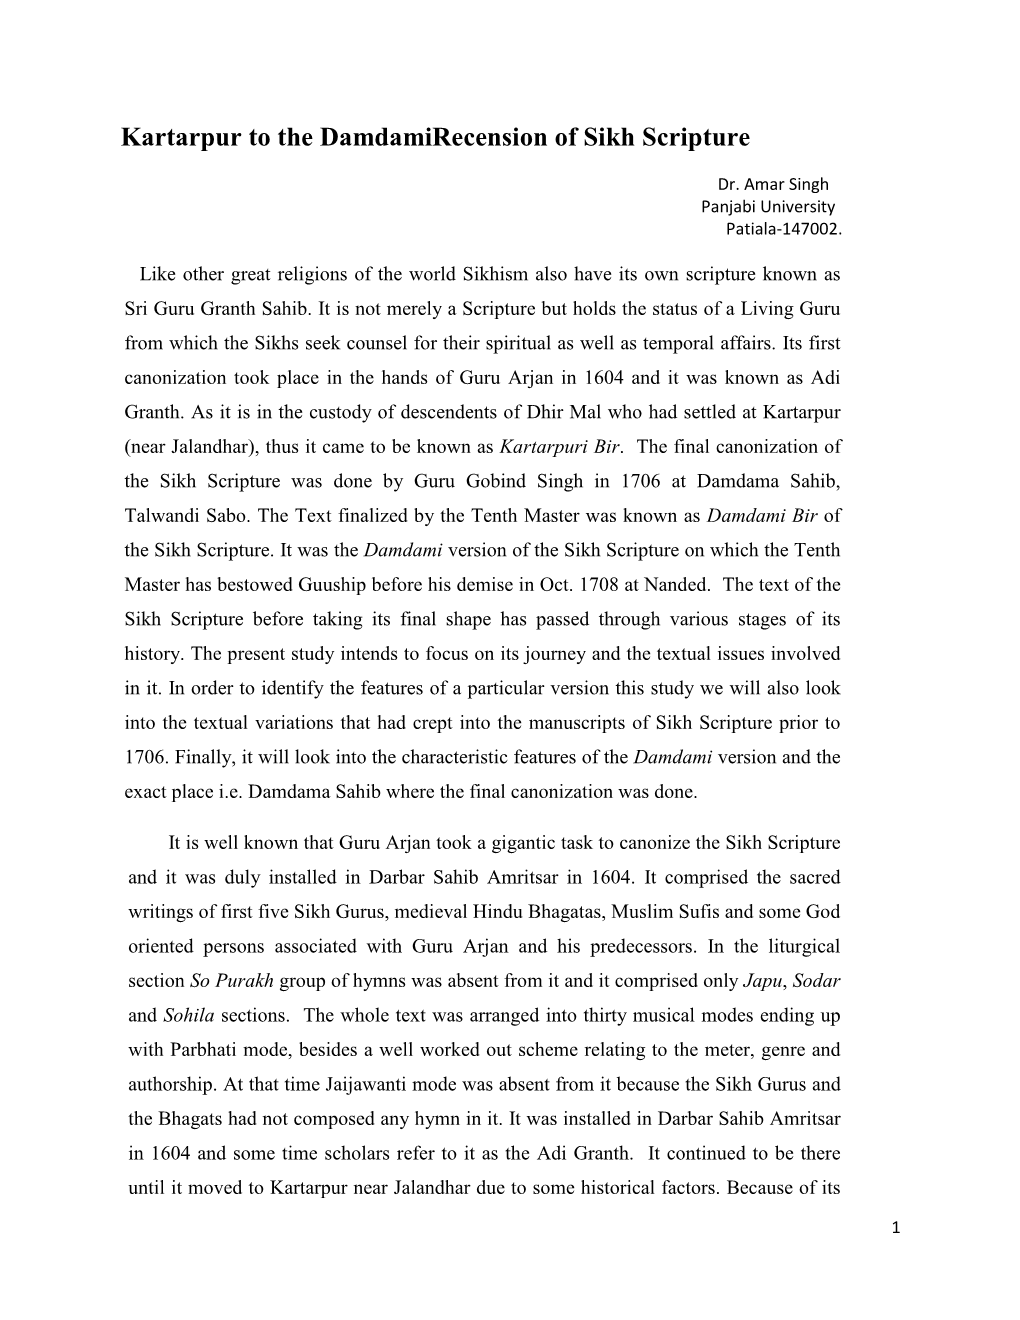 Kartarpur to the Damdamirecension of Sikh Scripture – Dr. Amar Singh